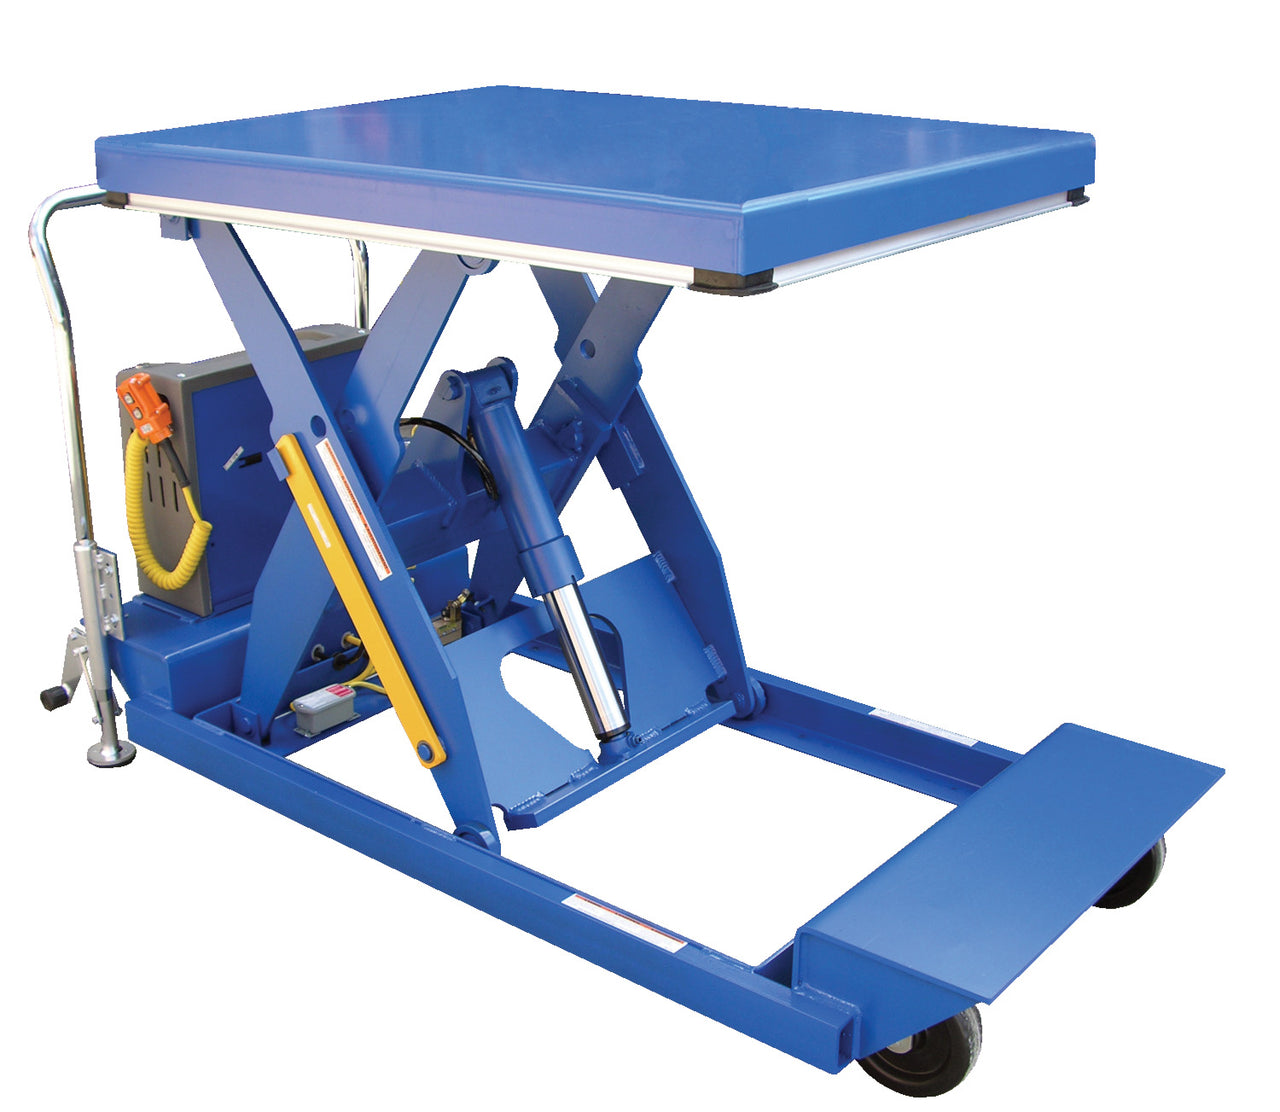 1,000-lbs Capacity Portable Scissor Lift Table w/ 10" to 46" Service Range